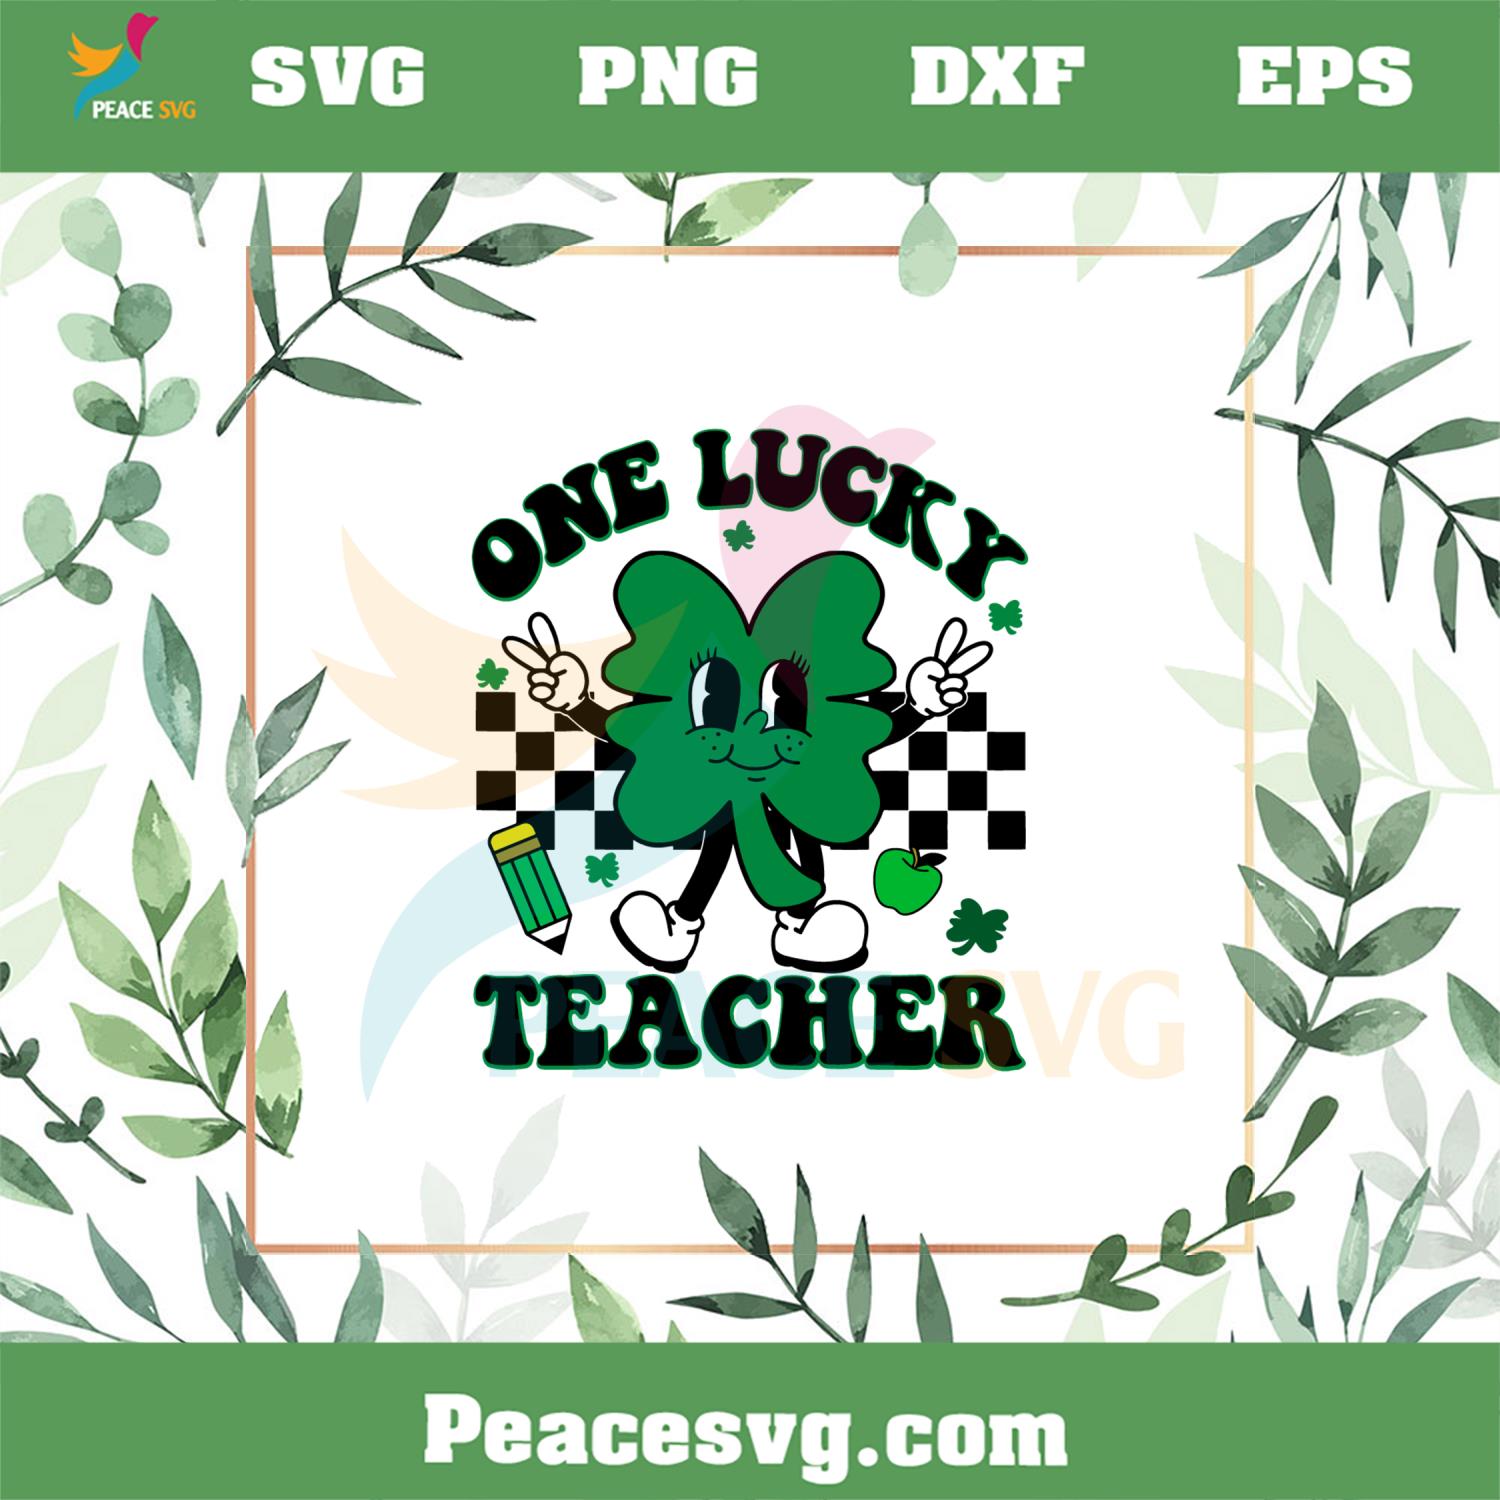 One Lucky Teacher Groovy Retro Teacher St Patrick’s Day SVG Cutting Files